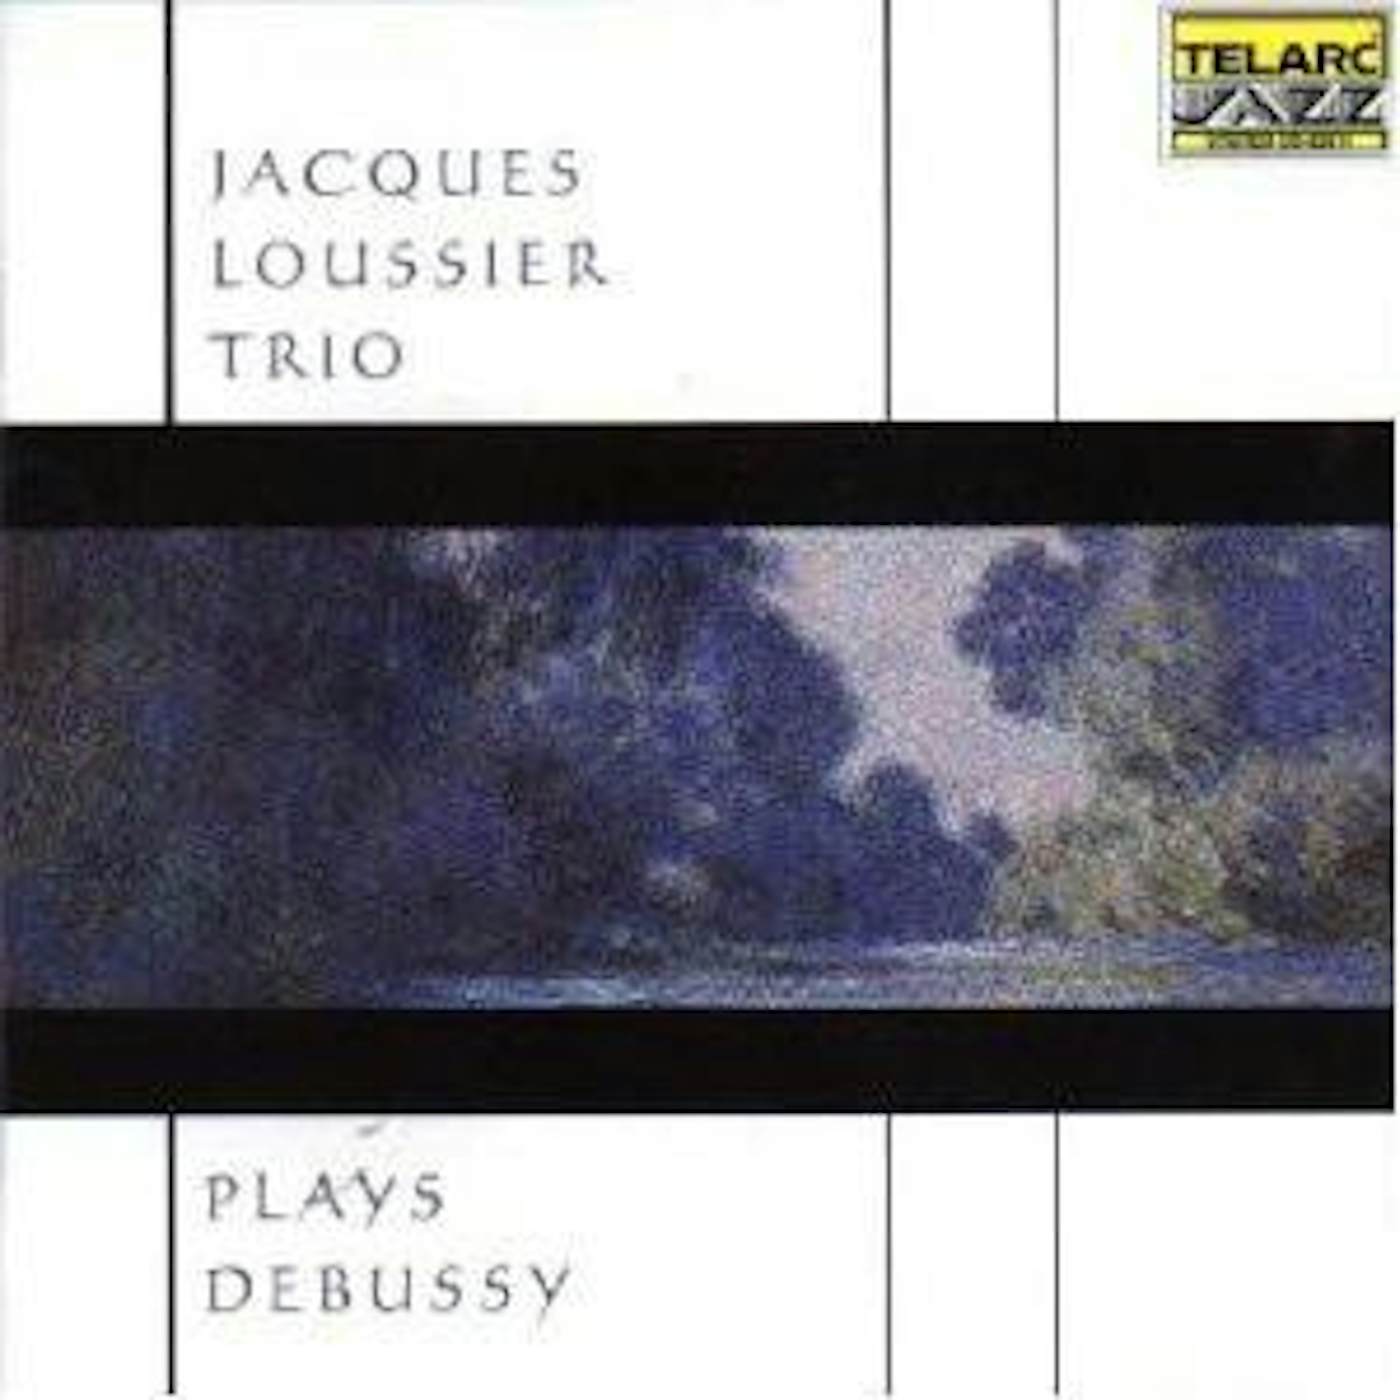 JACQUES LOUSSIER TRIO PLAYS DEBUSSY CD